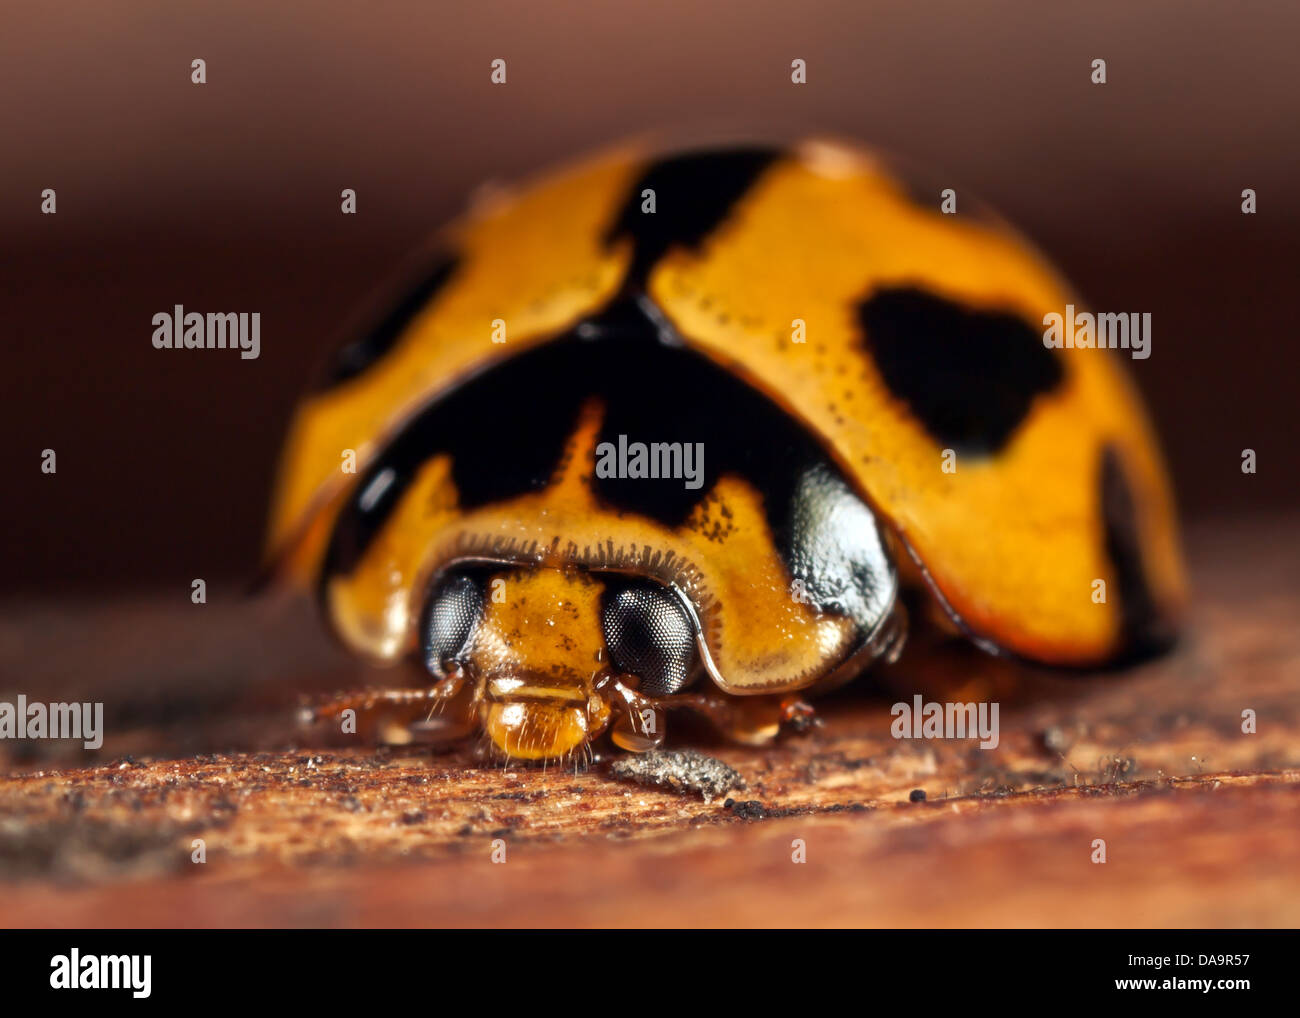 ladybug on wood Stock Photo